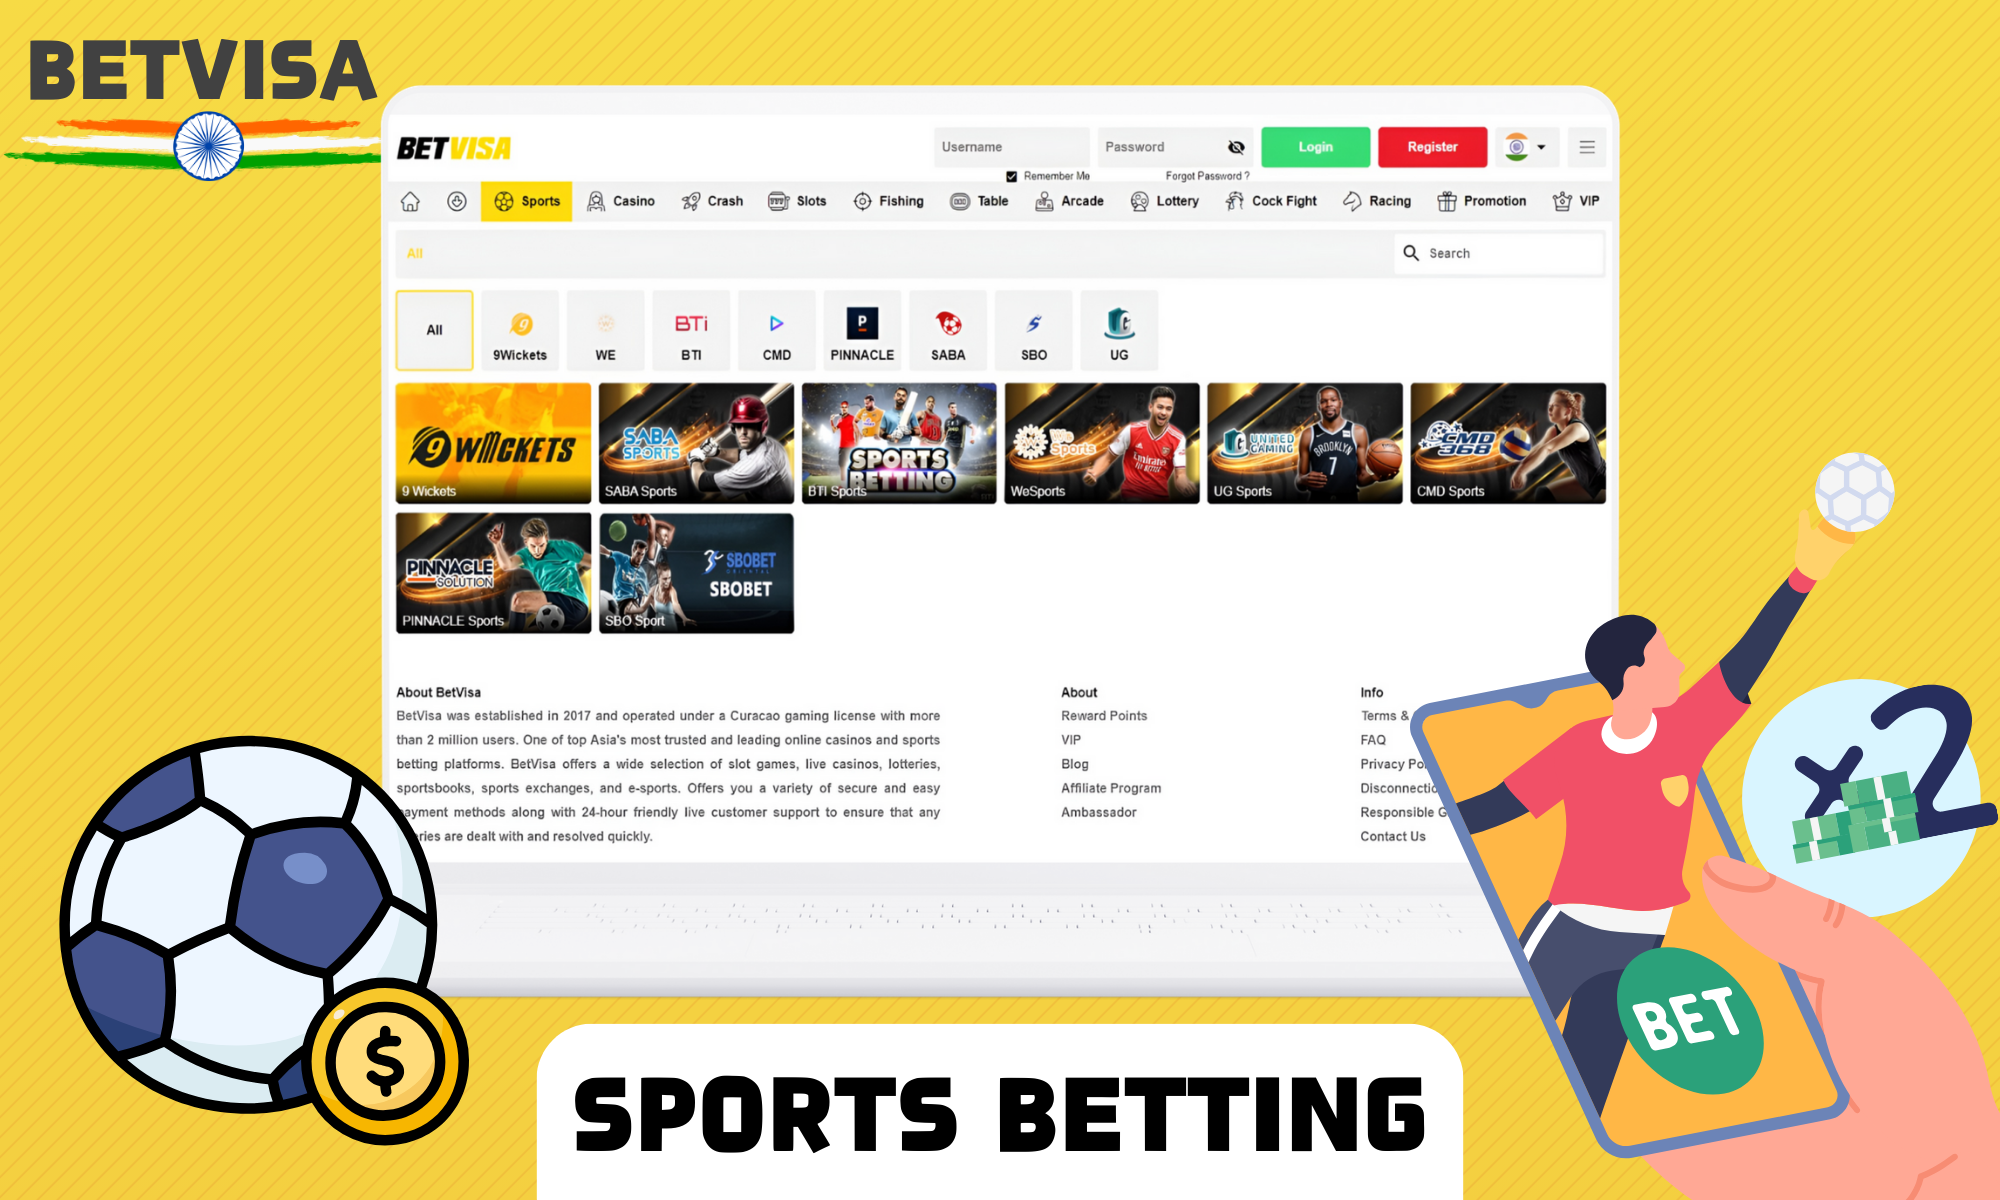 Betvisa’s sports betting platform